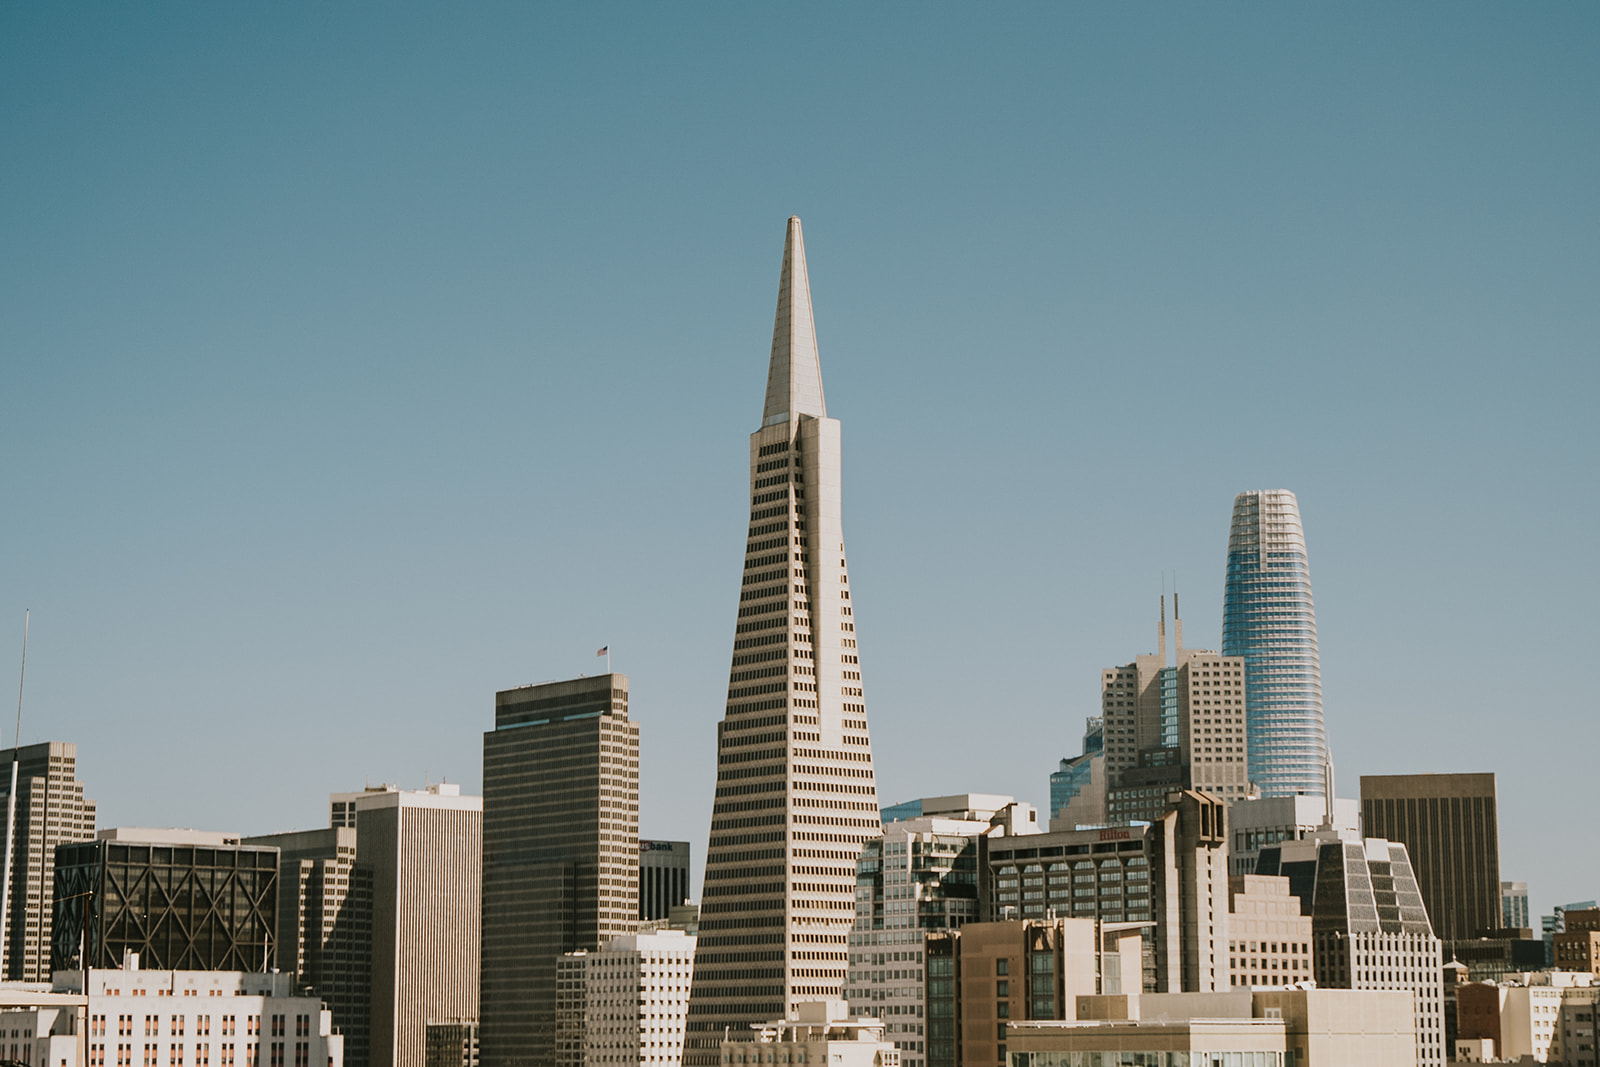 San Francisco skyline shot featuring the Transamerica Pyramid